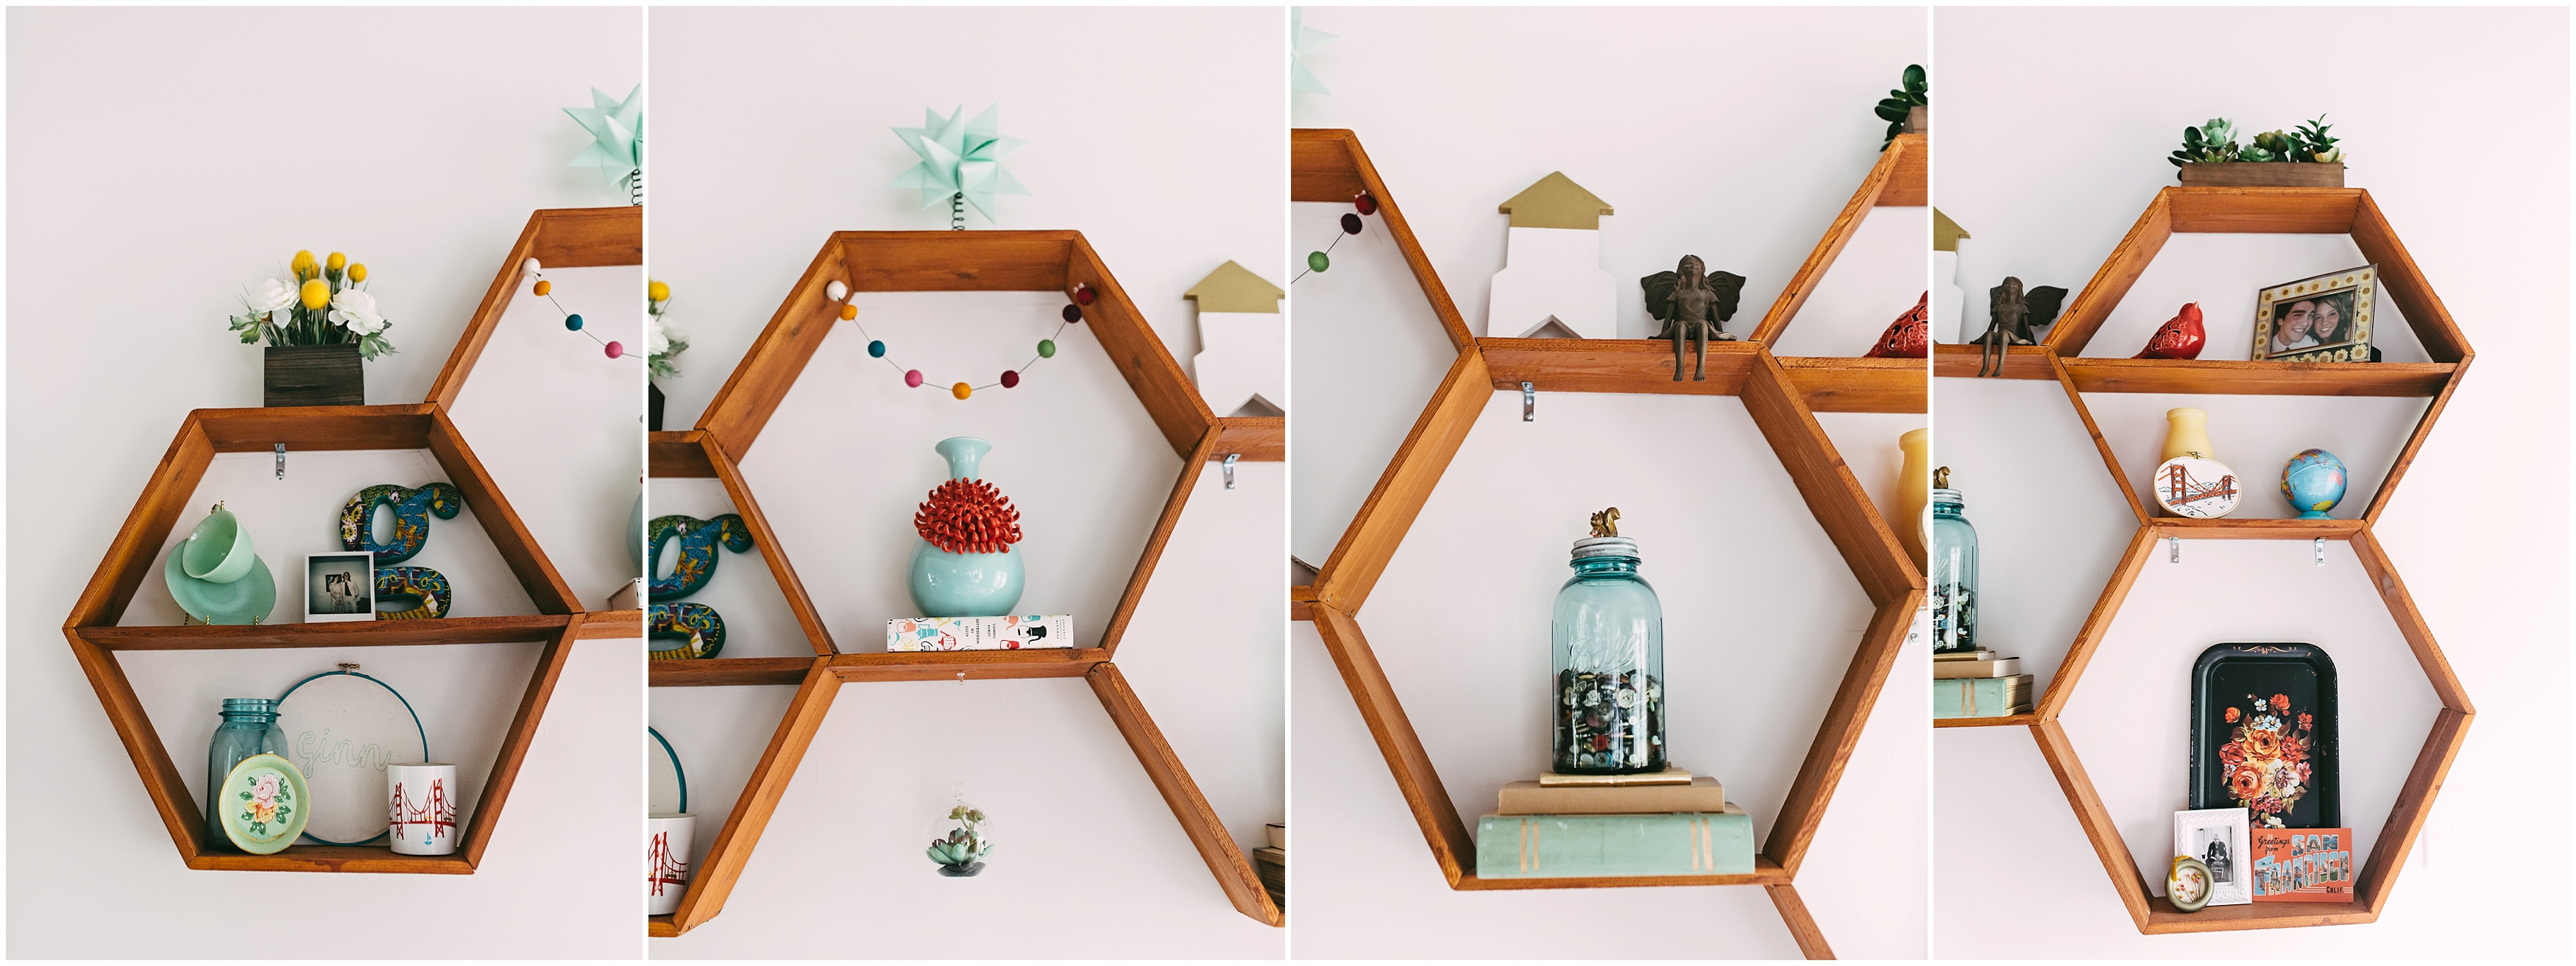 honeycomb-shelves-anthropologie-trinkets